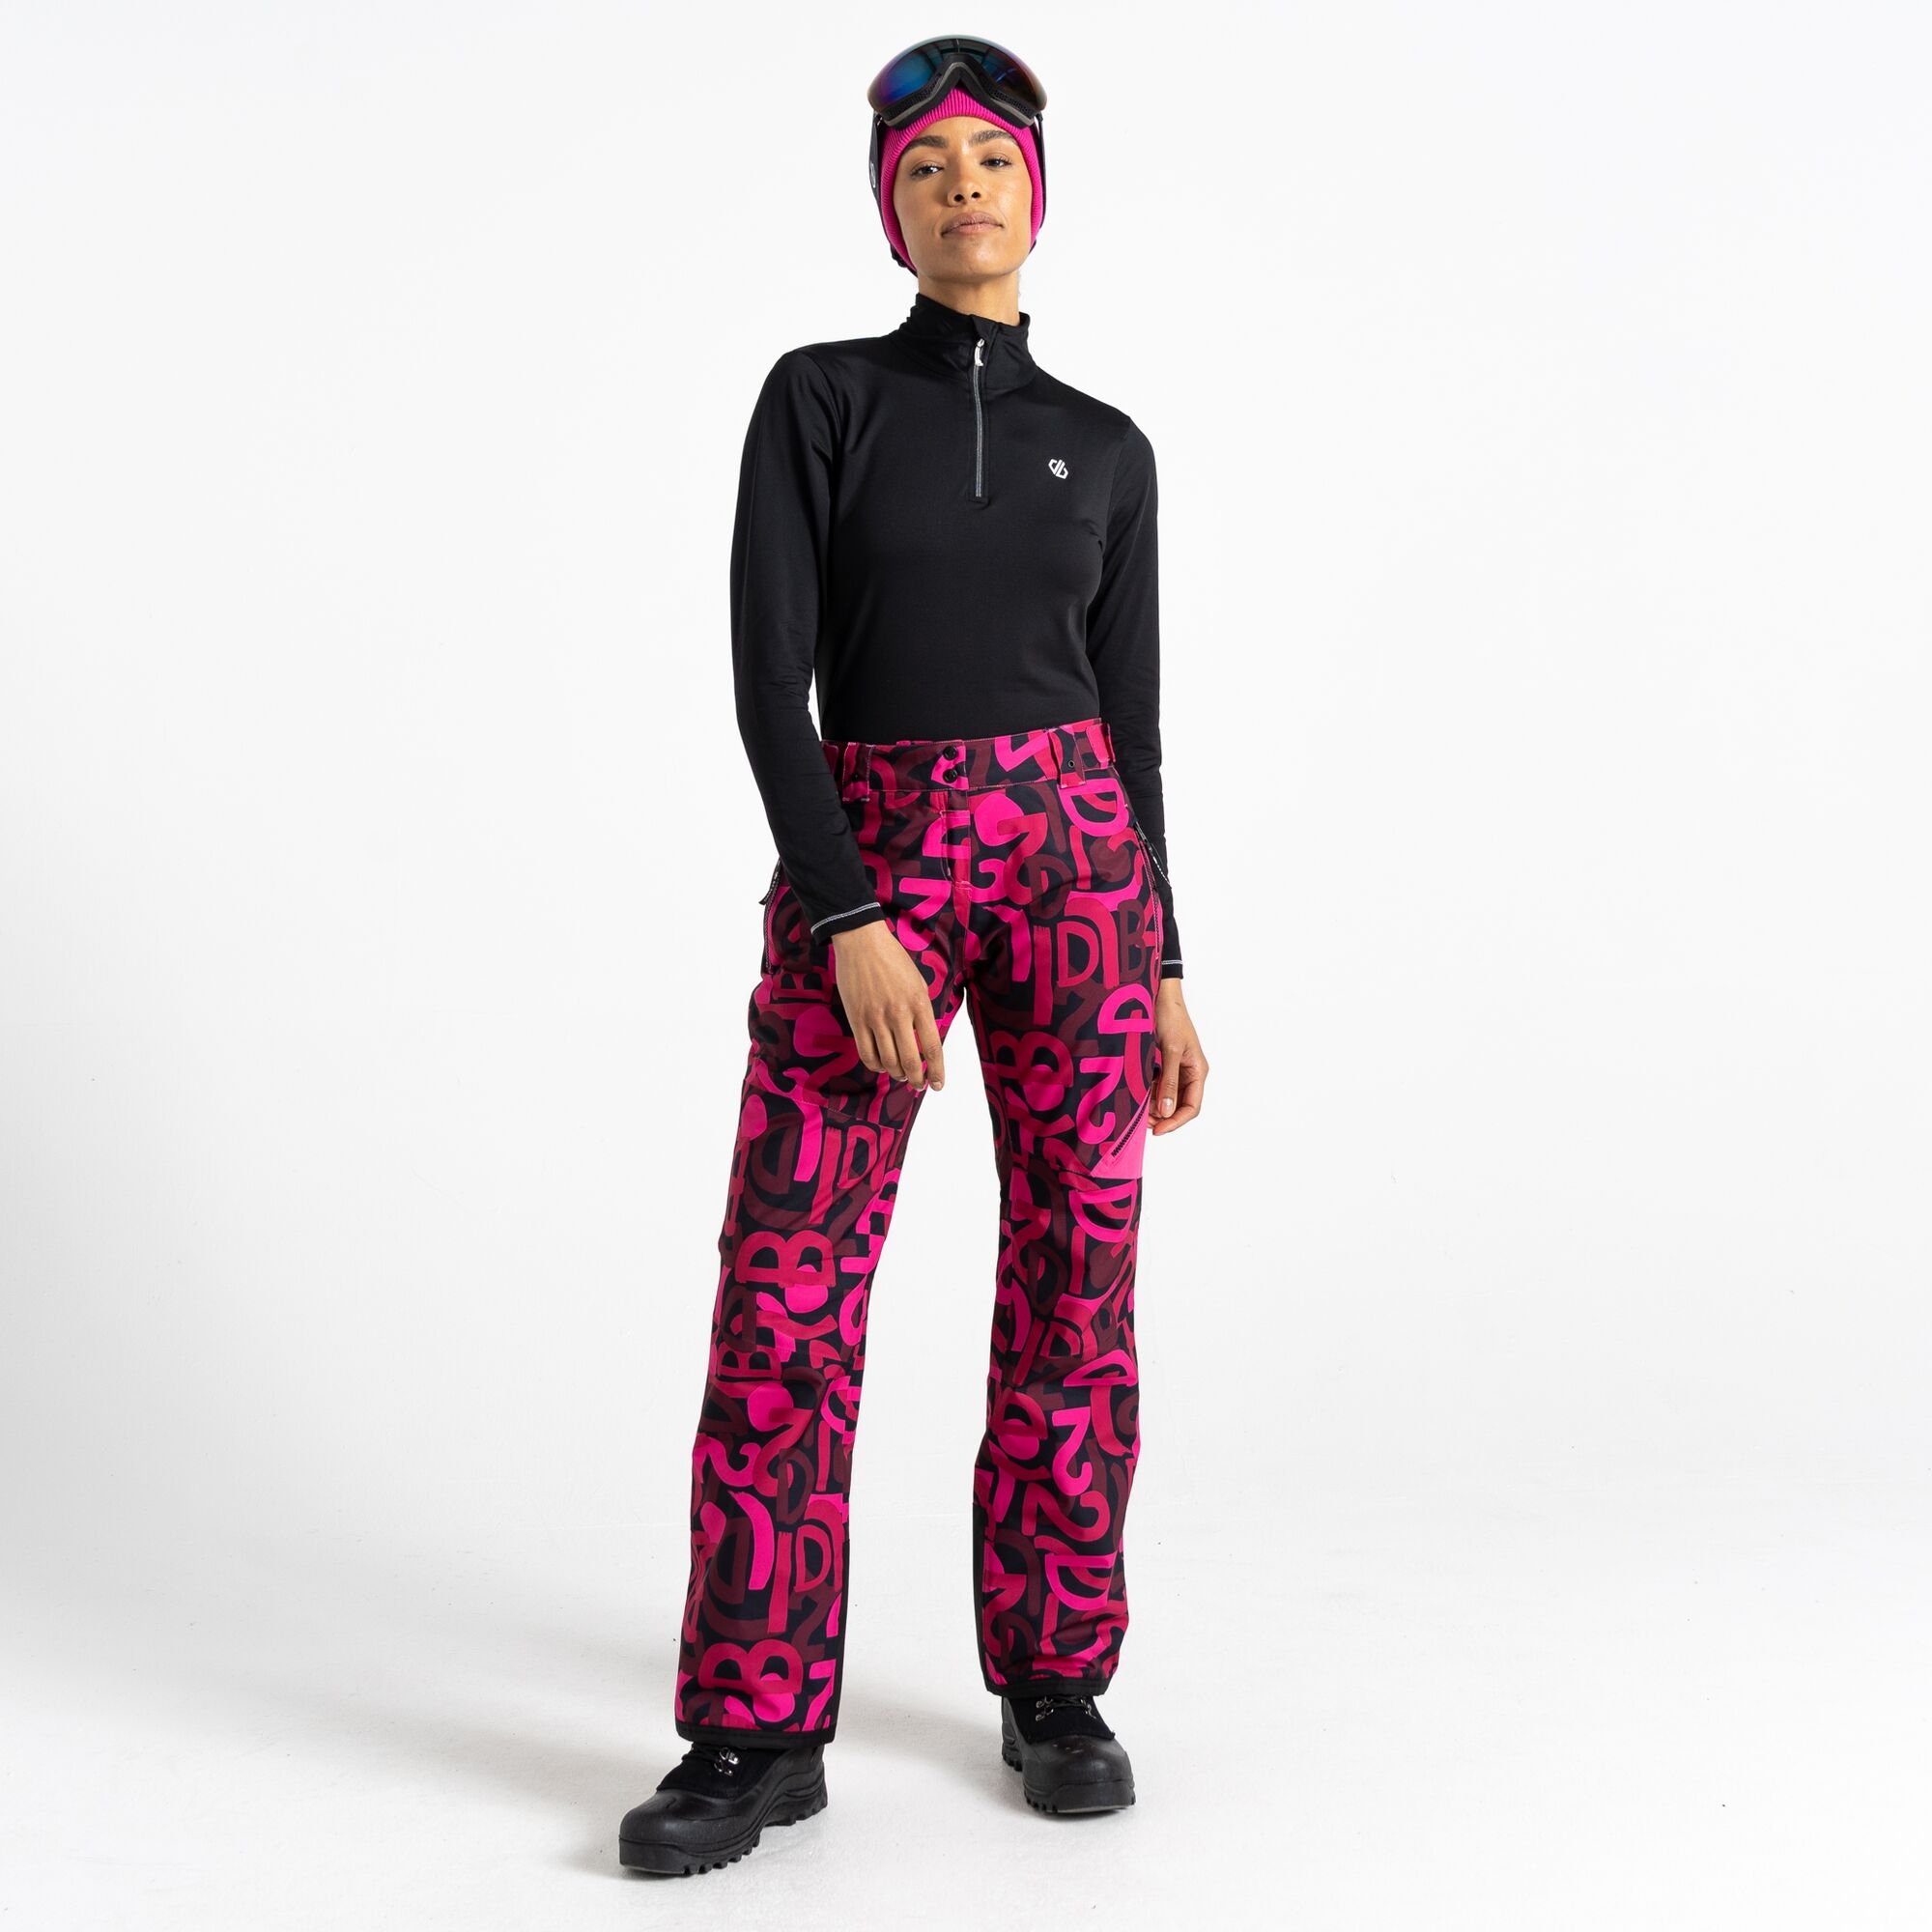 Photos - Ski Wear DARE 2B Women's Breathable Ice Ski Pant Pink Graffiti Print, Size: 8 DWW55 